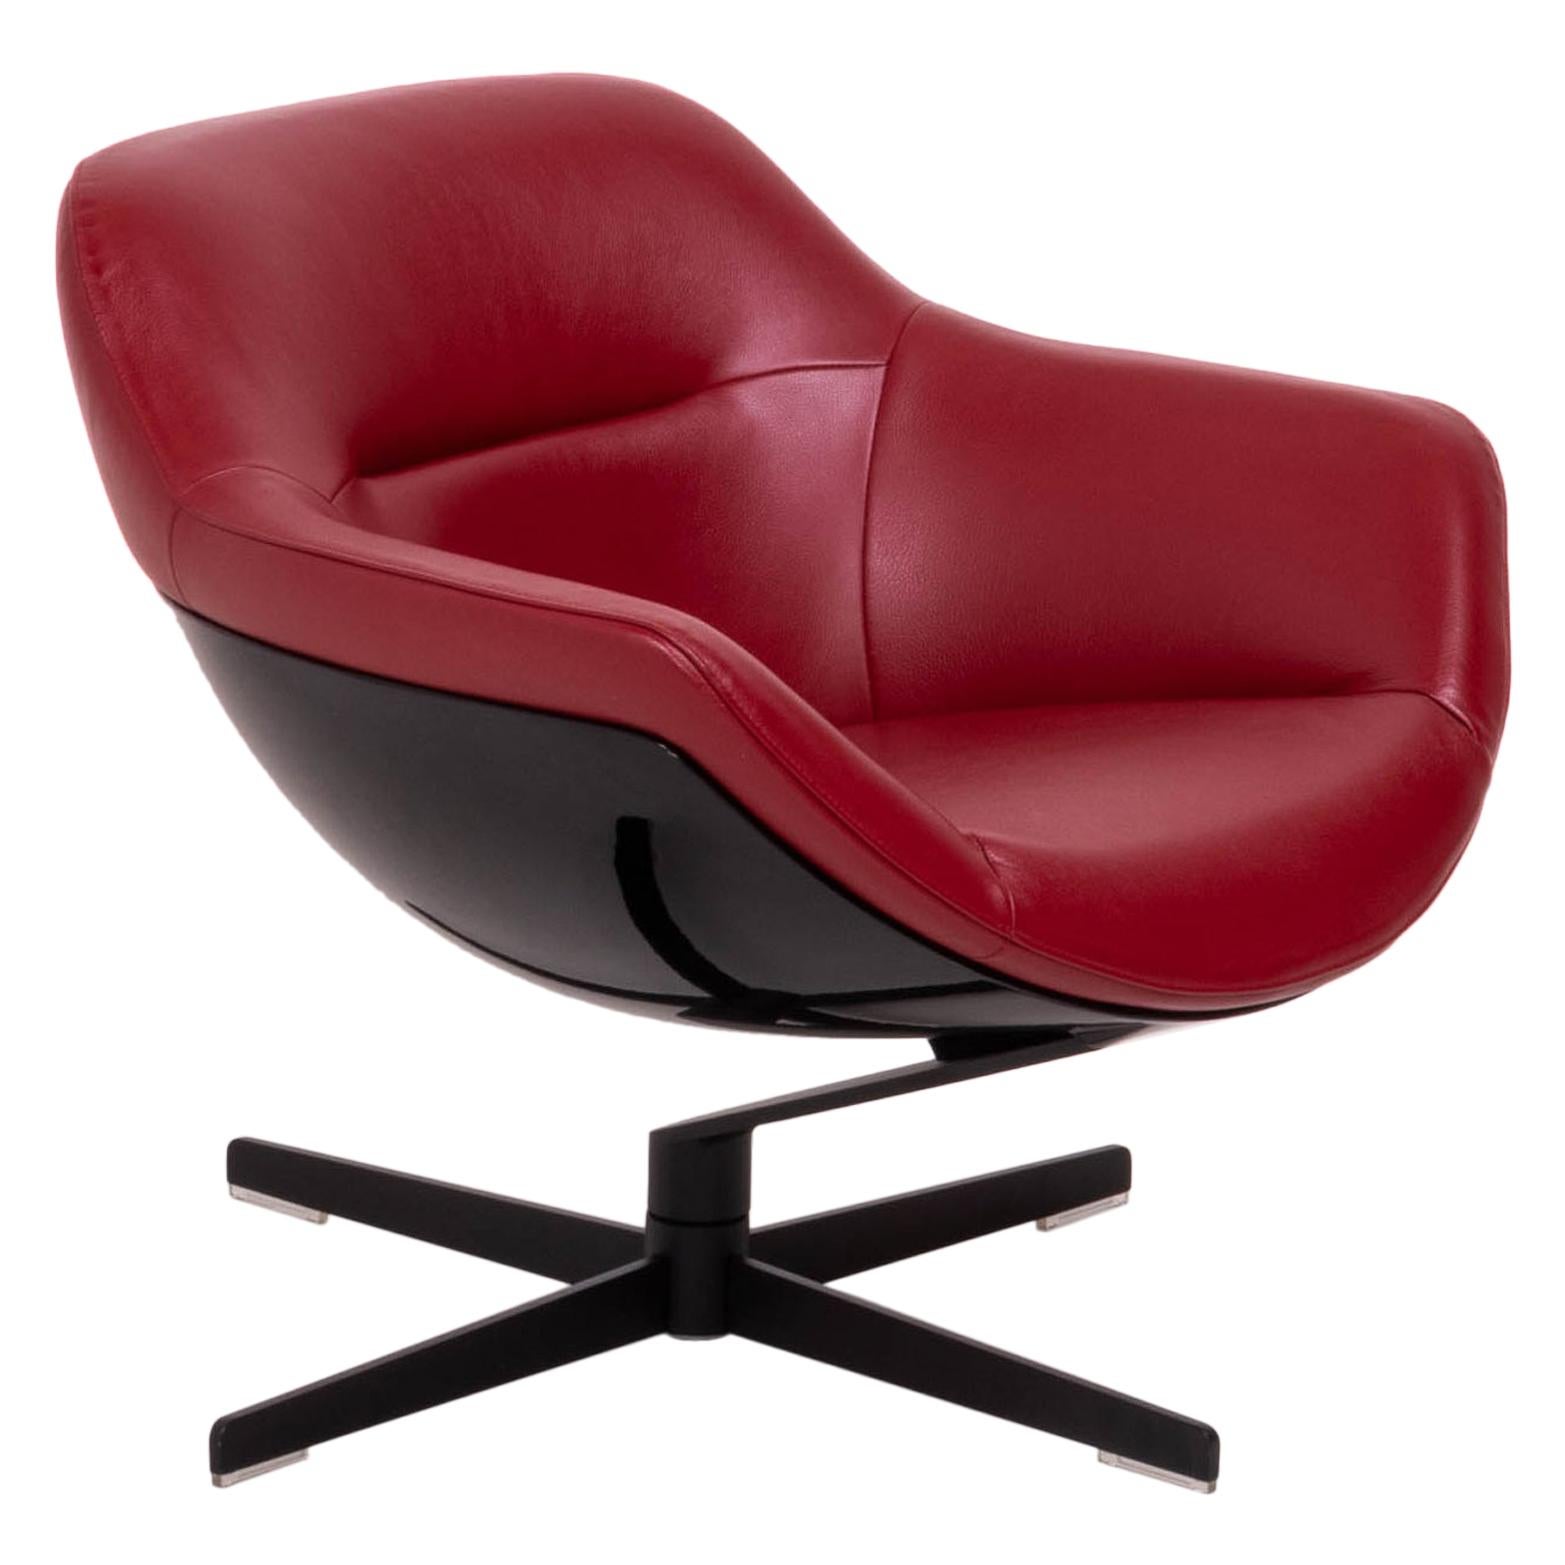 Jean-Marie Massaud Lounge Chairs